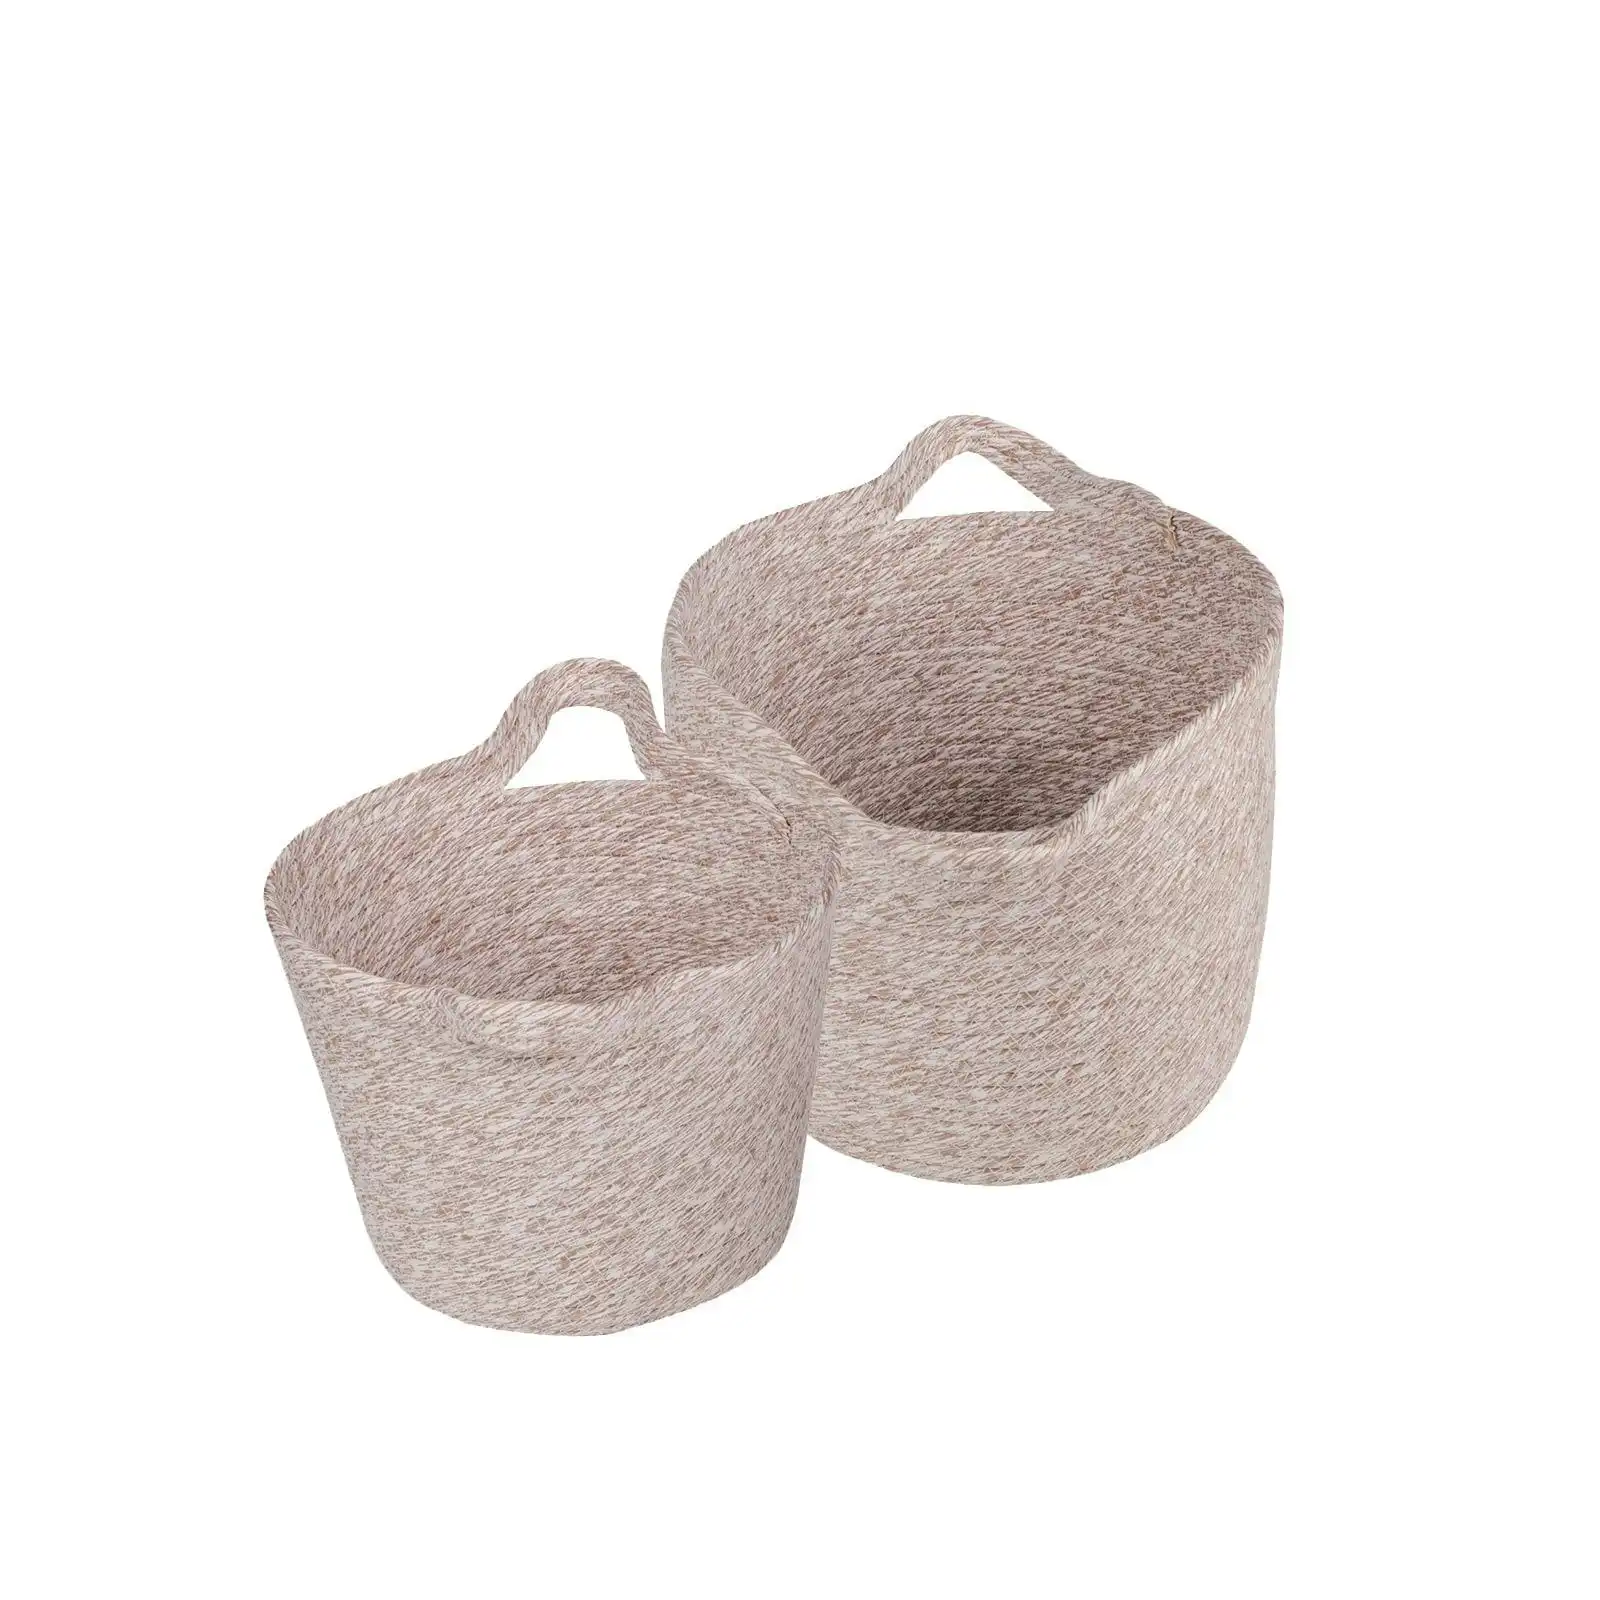 2 Piece Cotton Rope String Carry Handles Storage Baskets Set